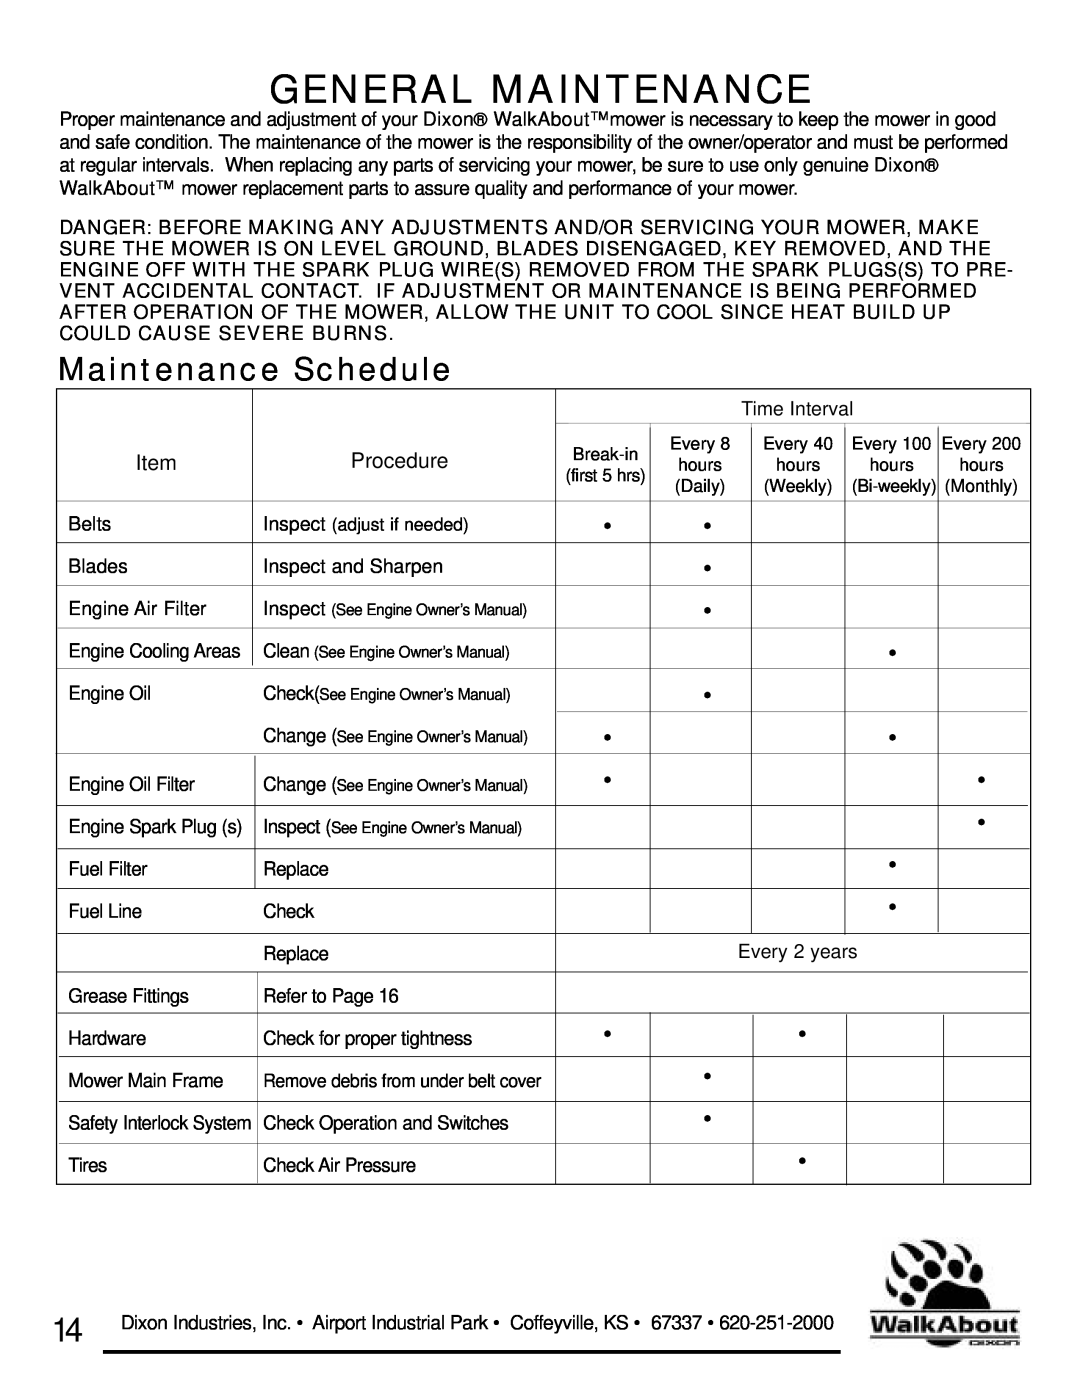 Dixon 36 & 48 owner manual General Maintenance, Maintenance Schedule 